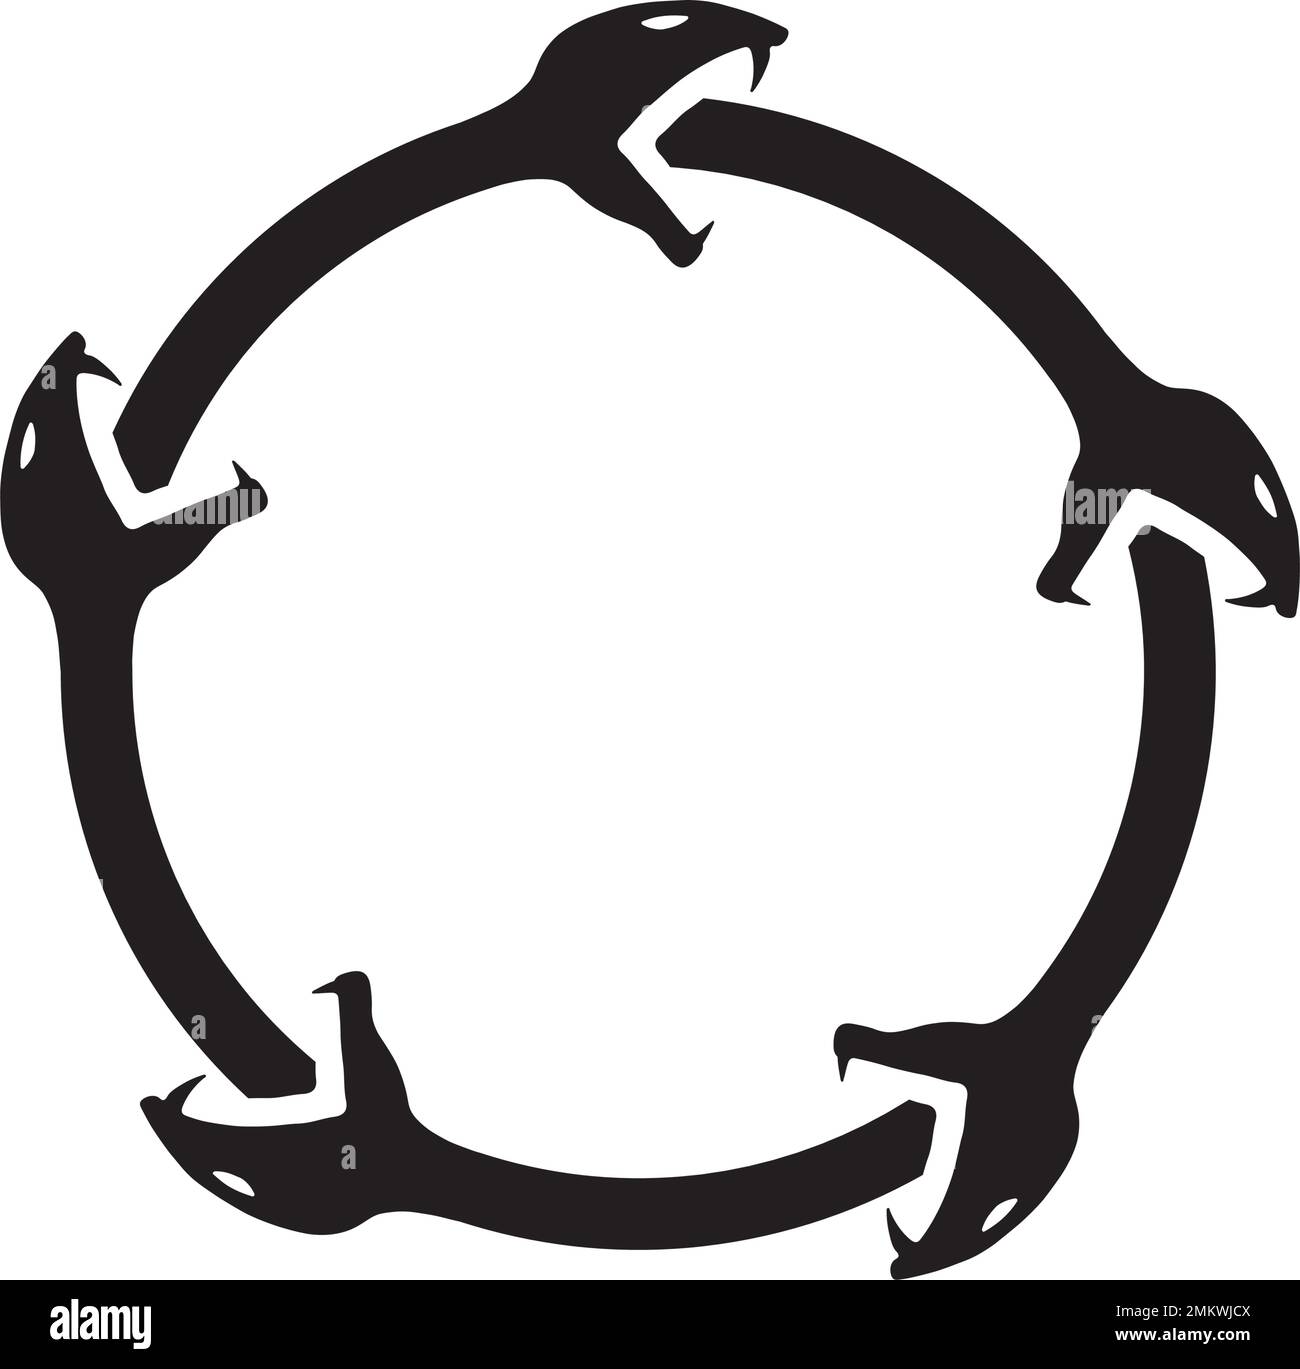 Ouroboros Circle of Five Black Snakes - Tattoo Concept Stock Vector